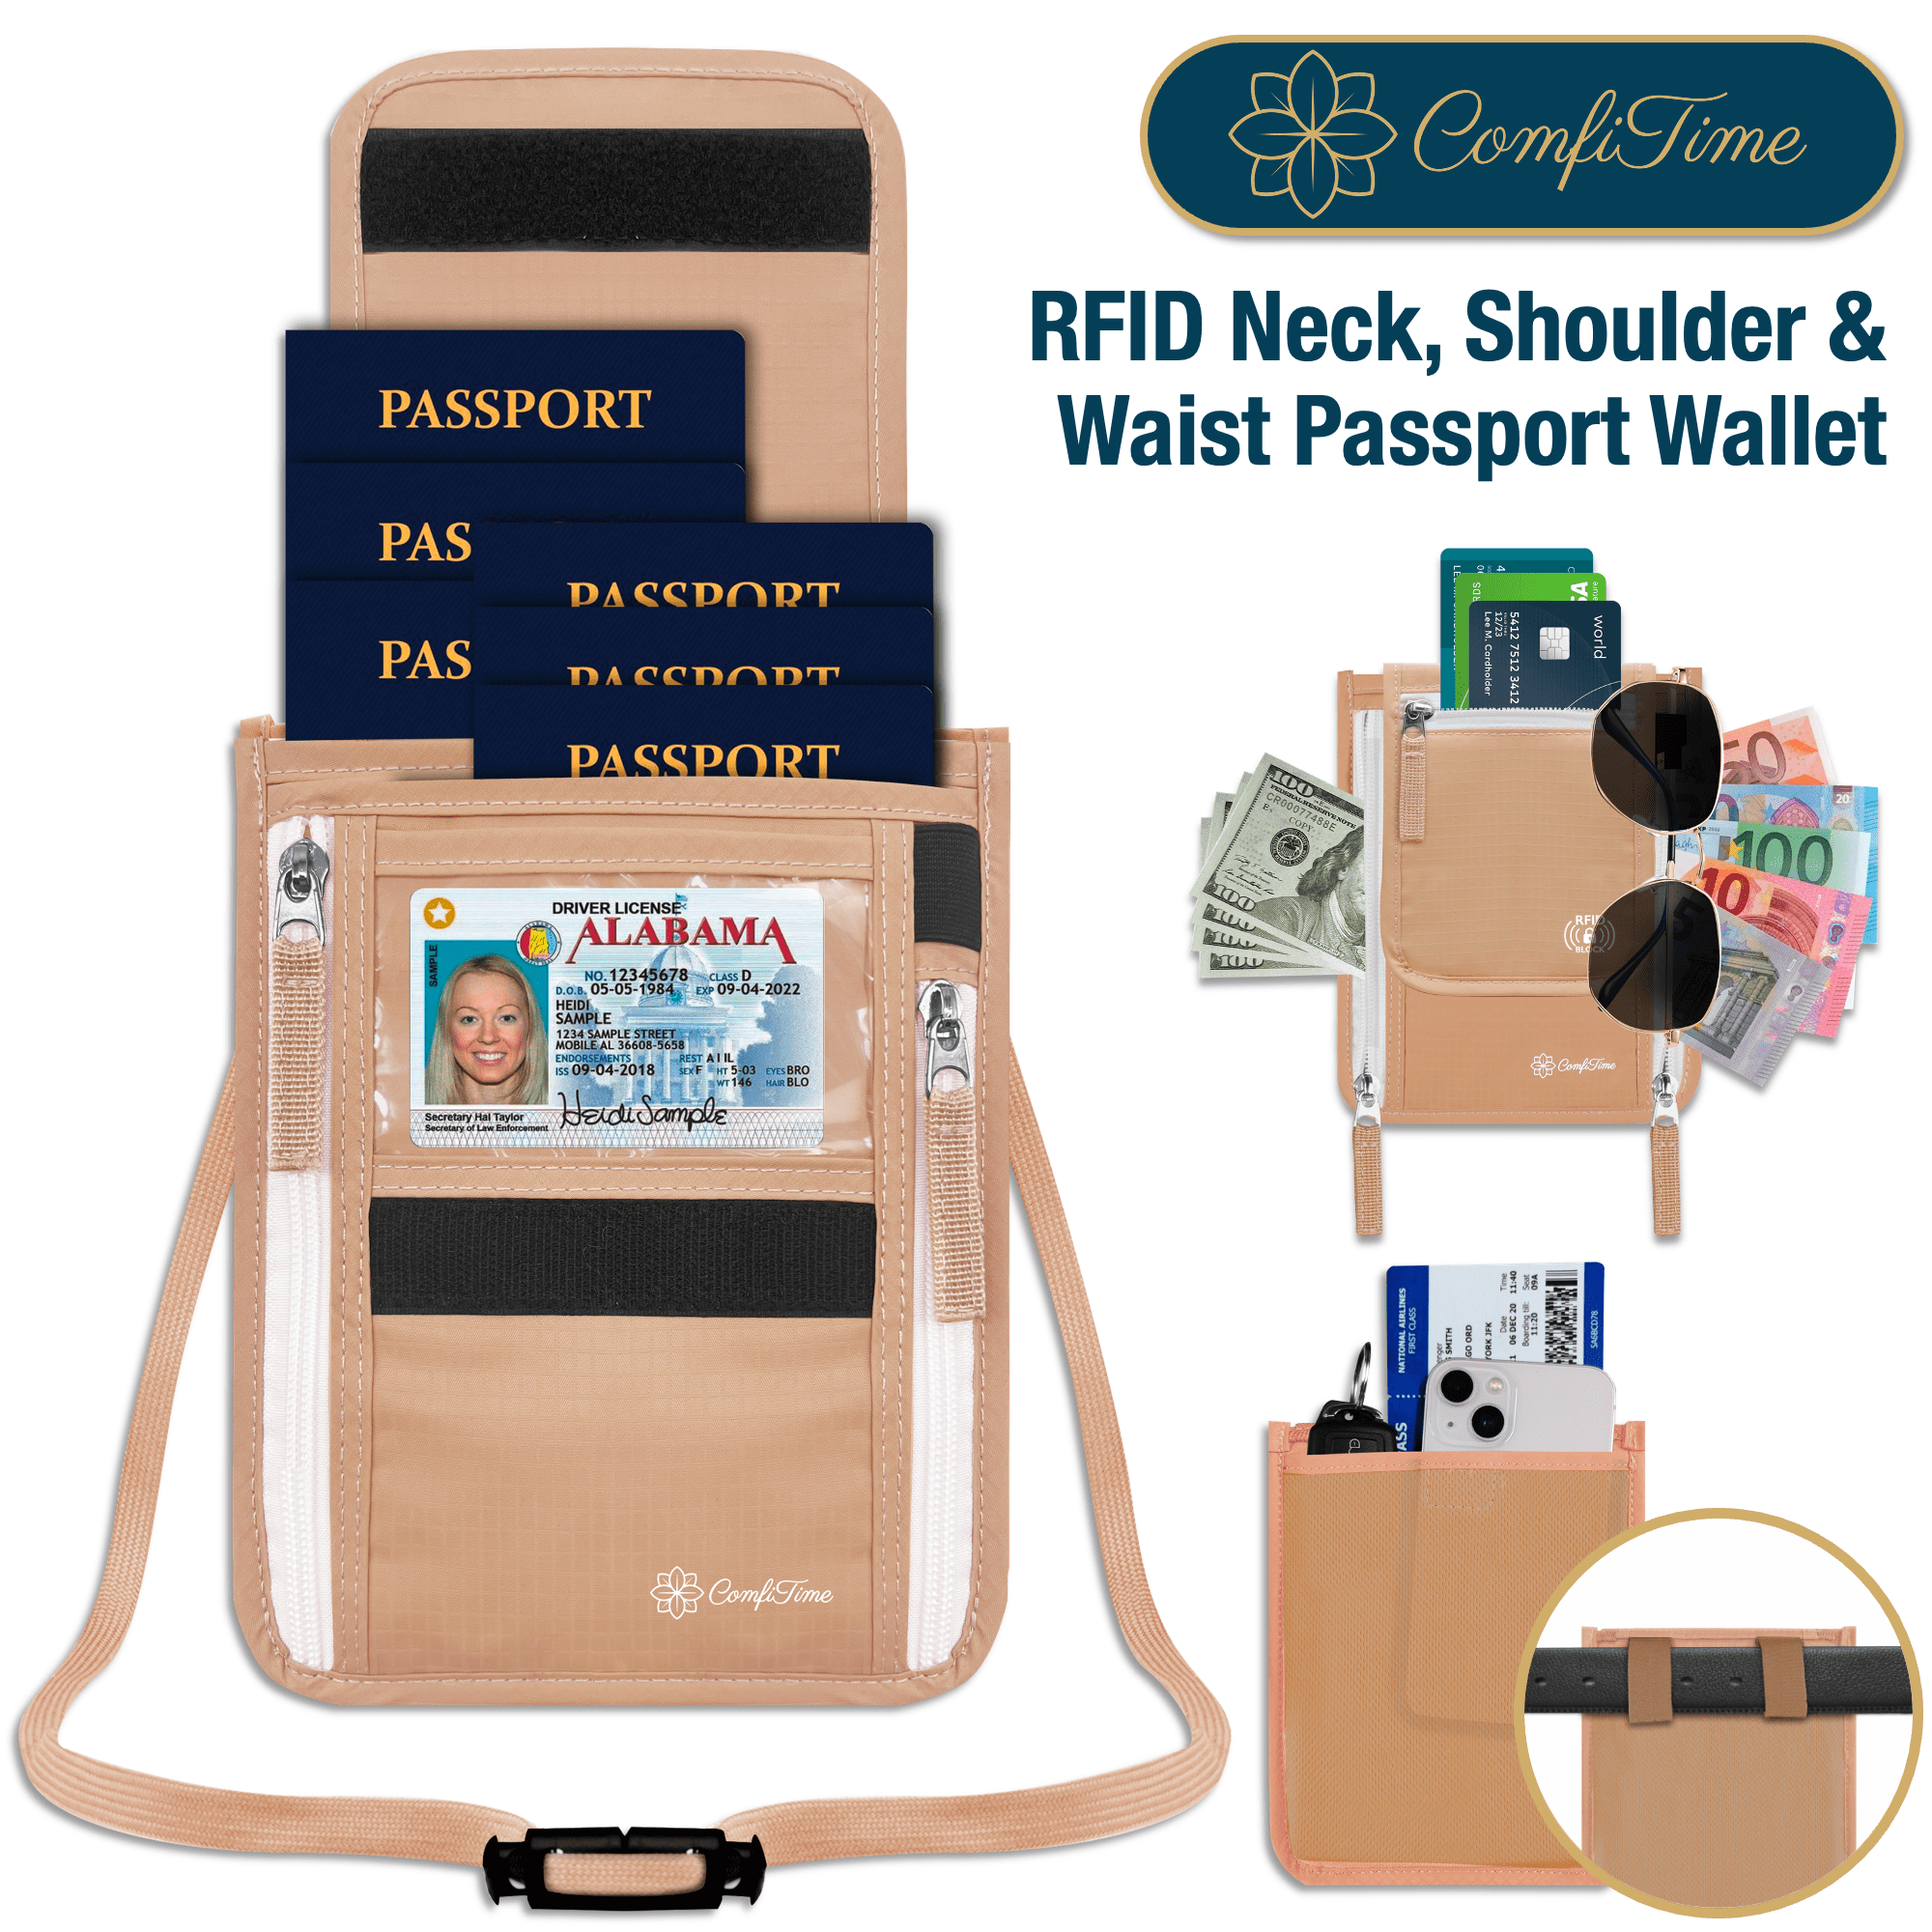 ComfiTime Passport Holder Neck Wallet - RFID Passport Wallet for Men, Women  and Family, Travel Document Holder, Passport Case/Cover, Money Belt Hidden 